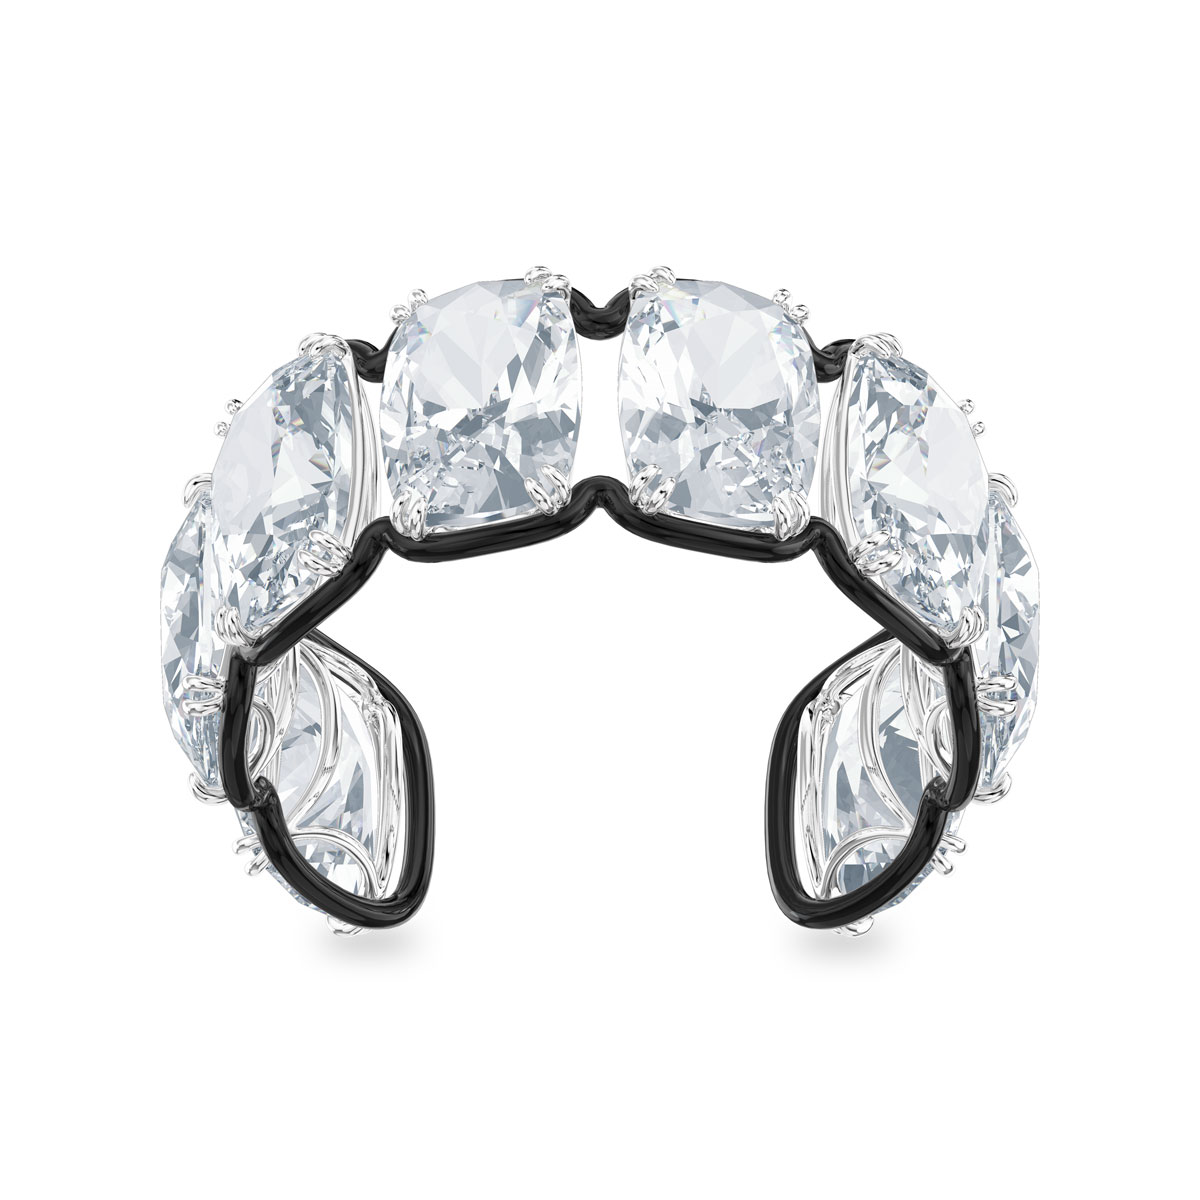 Swarovski Harmonia Cuff Bracelet,Oversized Floating Crystal, White, Mixed Metal Finish Small